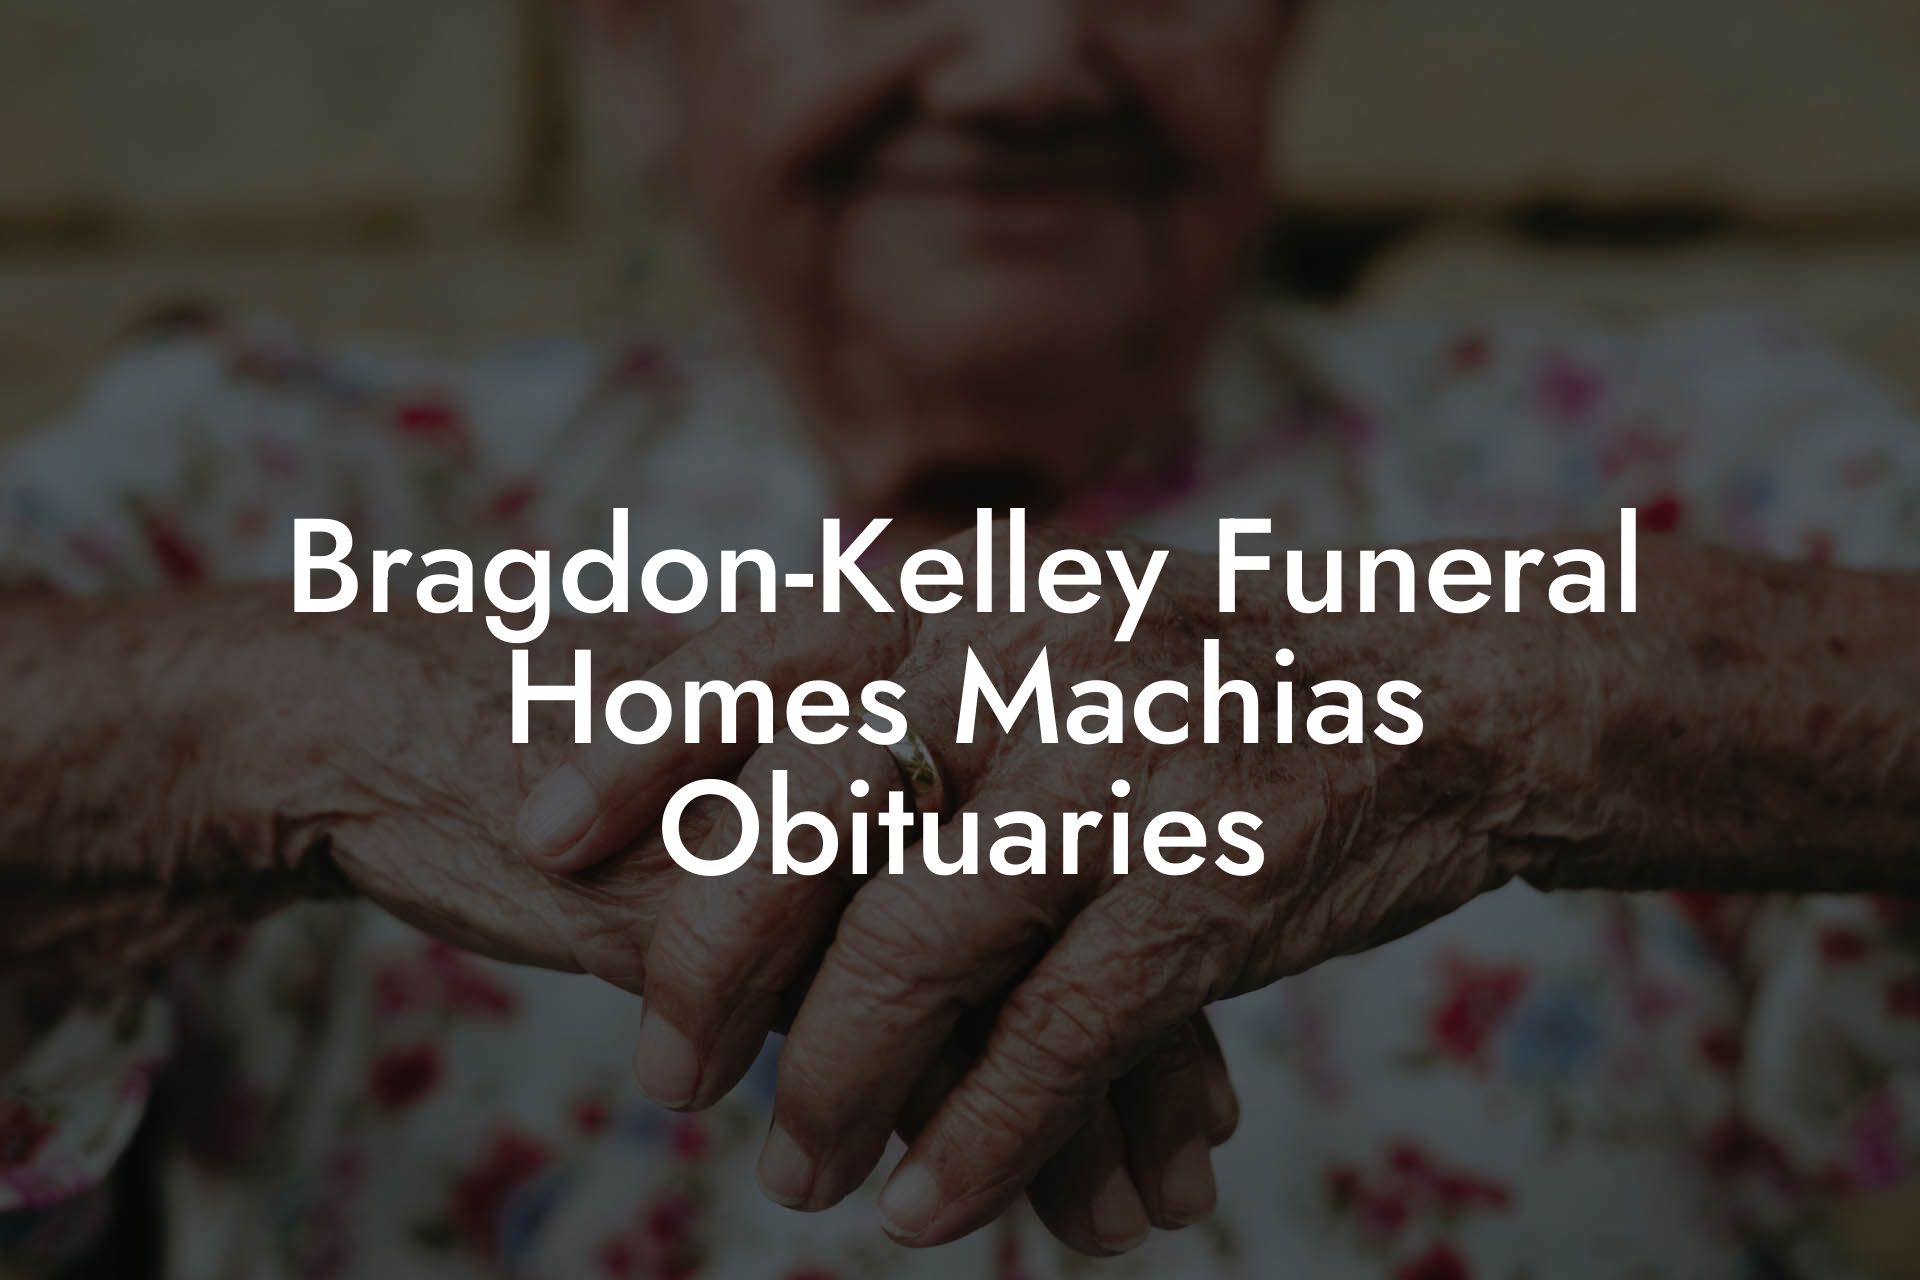 Bragdon-Kelley Funeral Homes Machias Obituaries